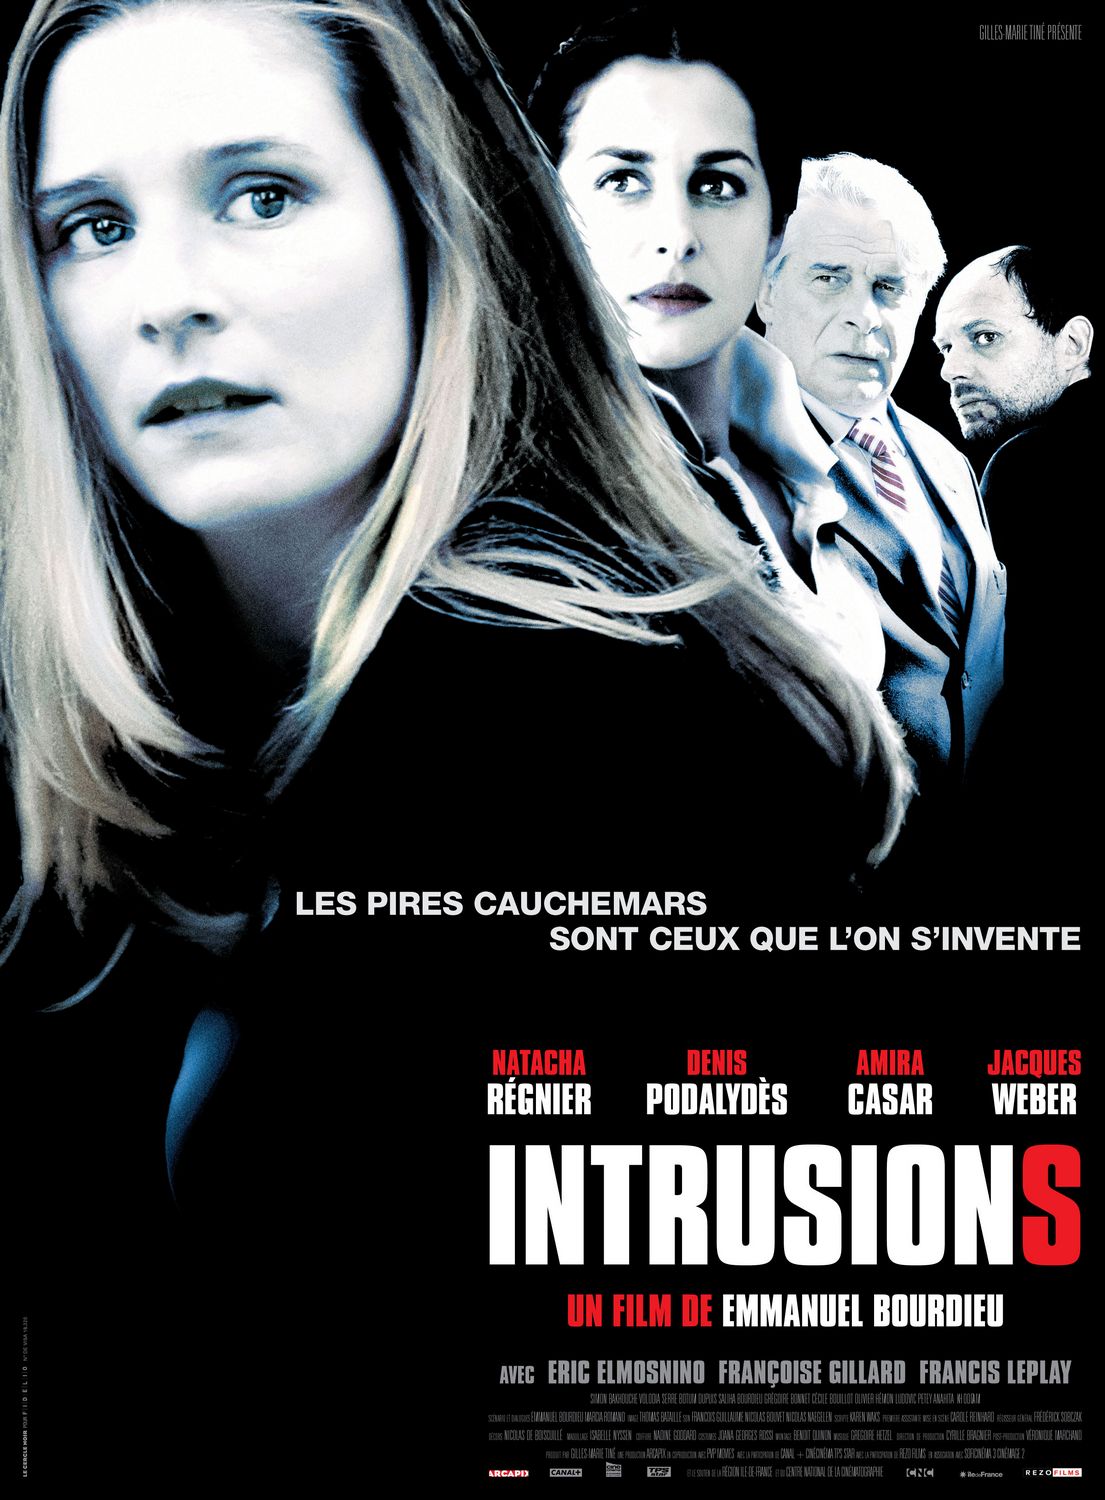 Intrusions movie